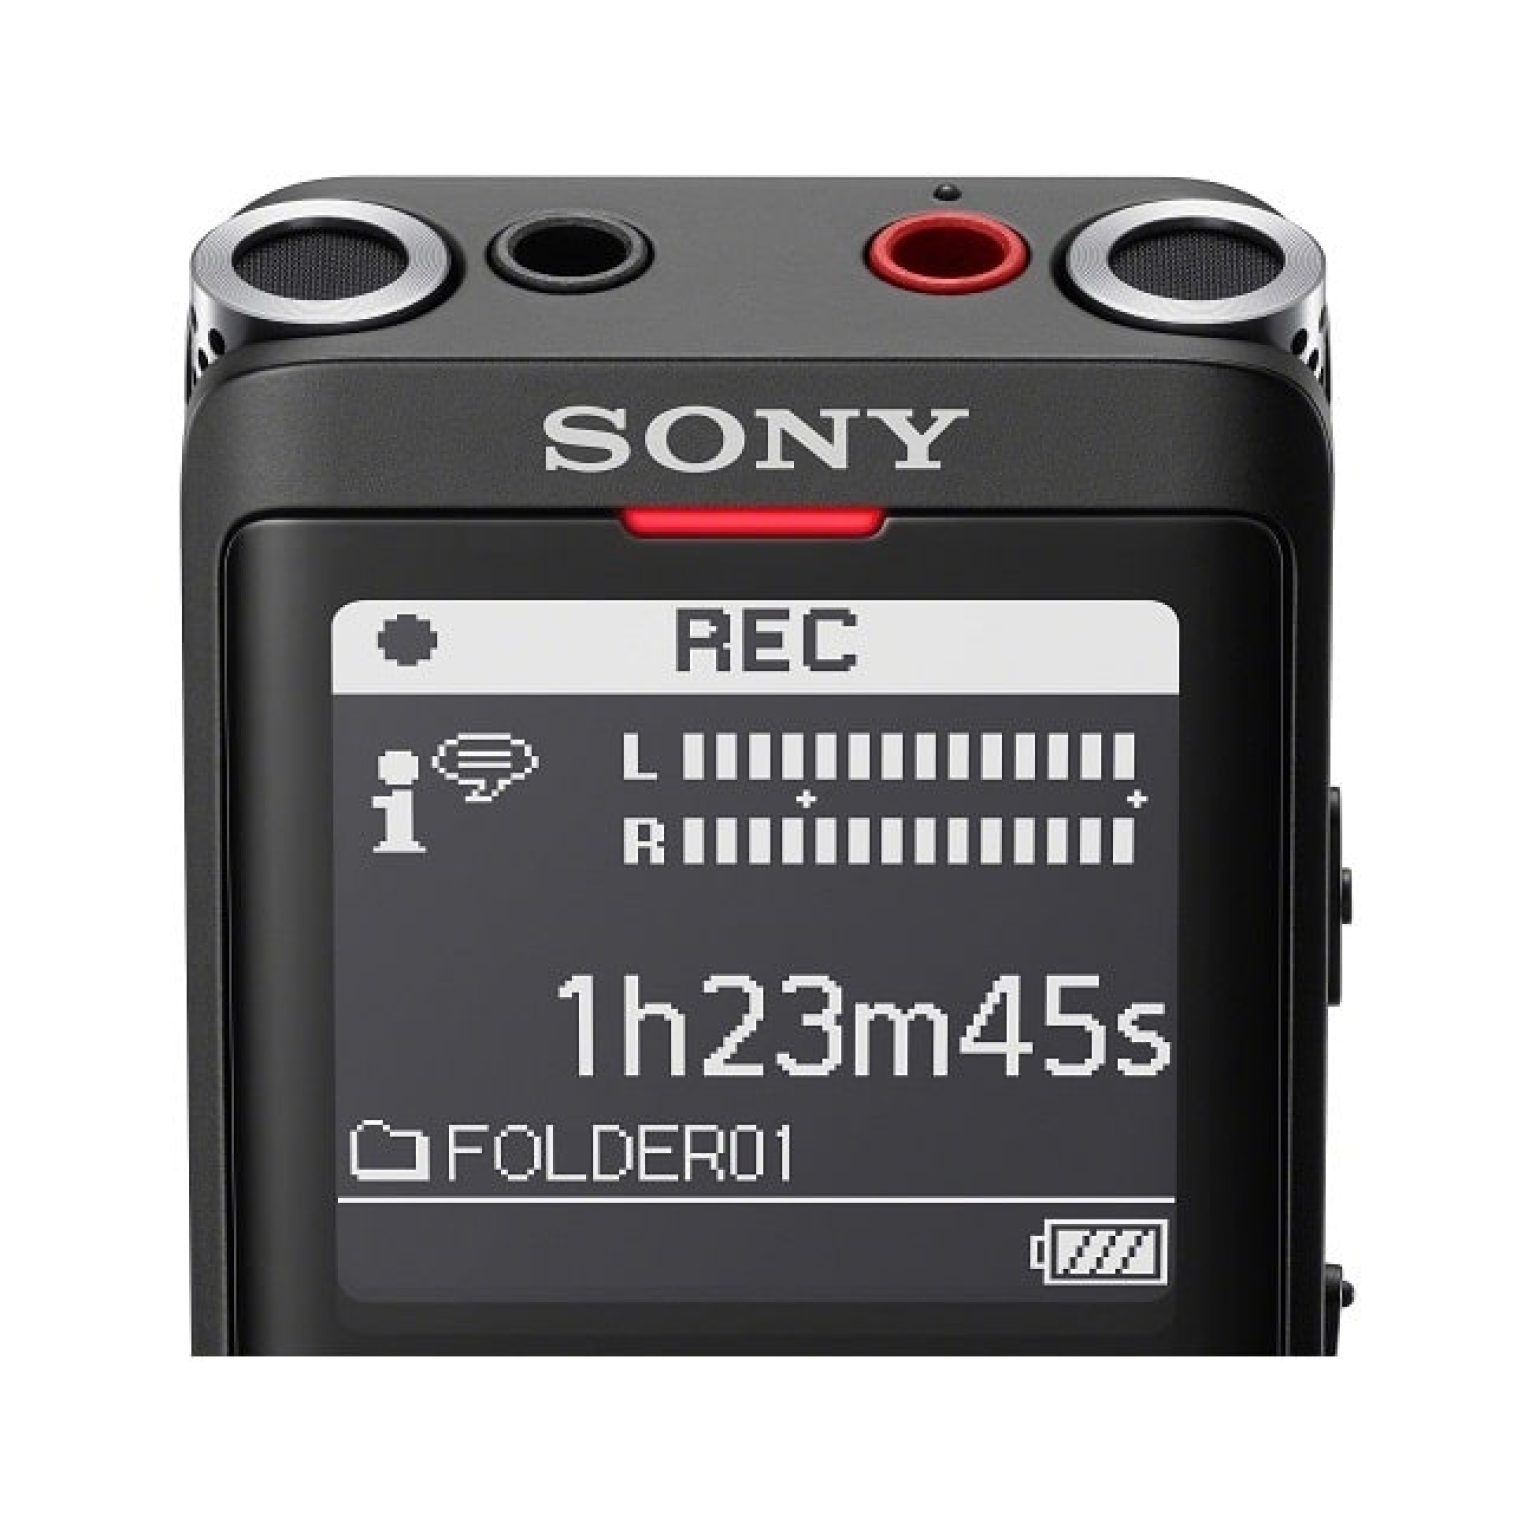 Sony ICD-UX570